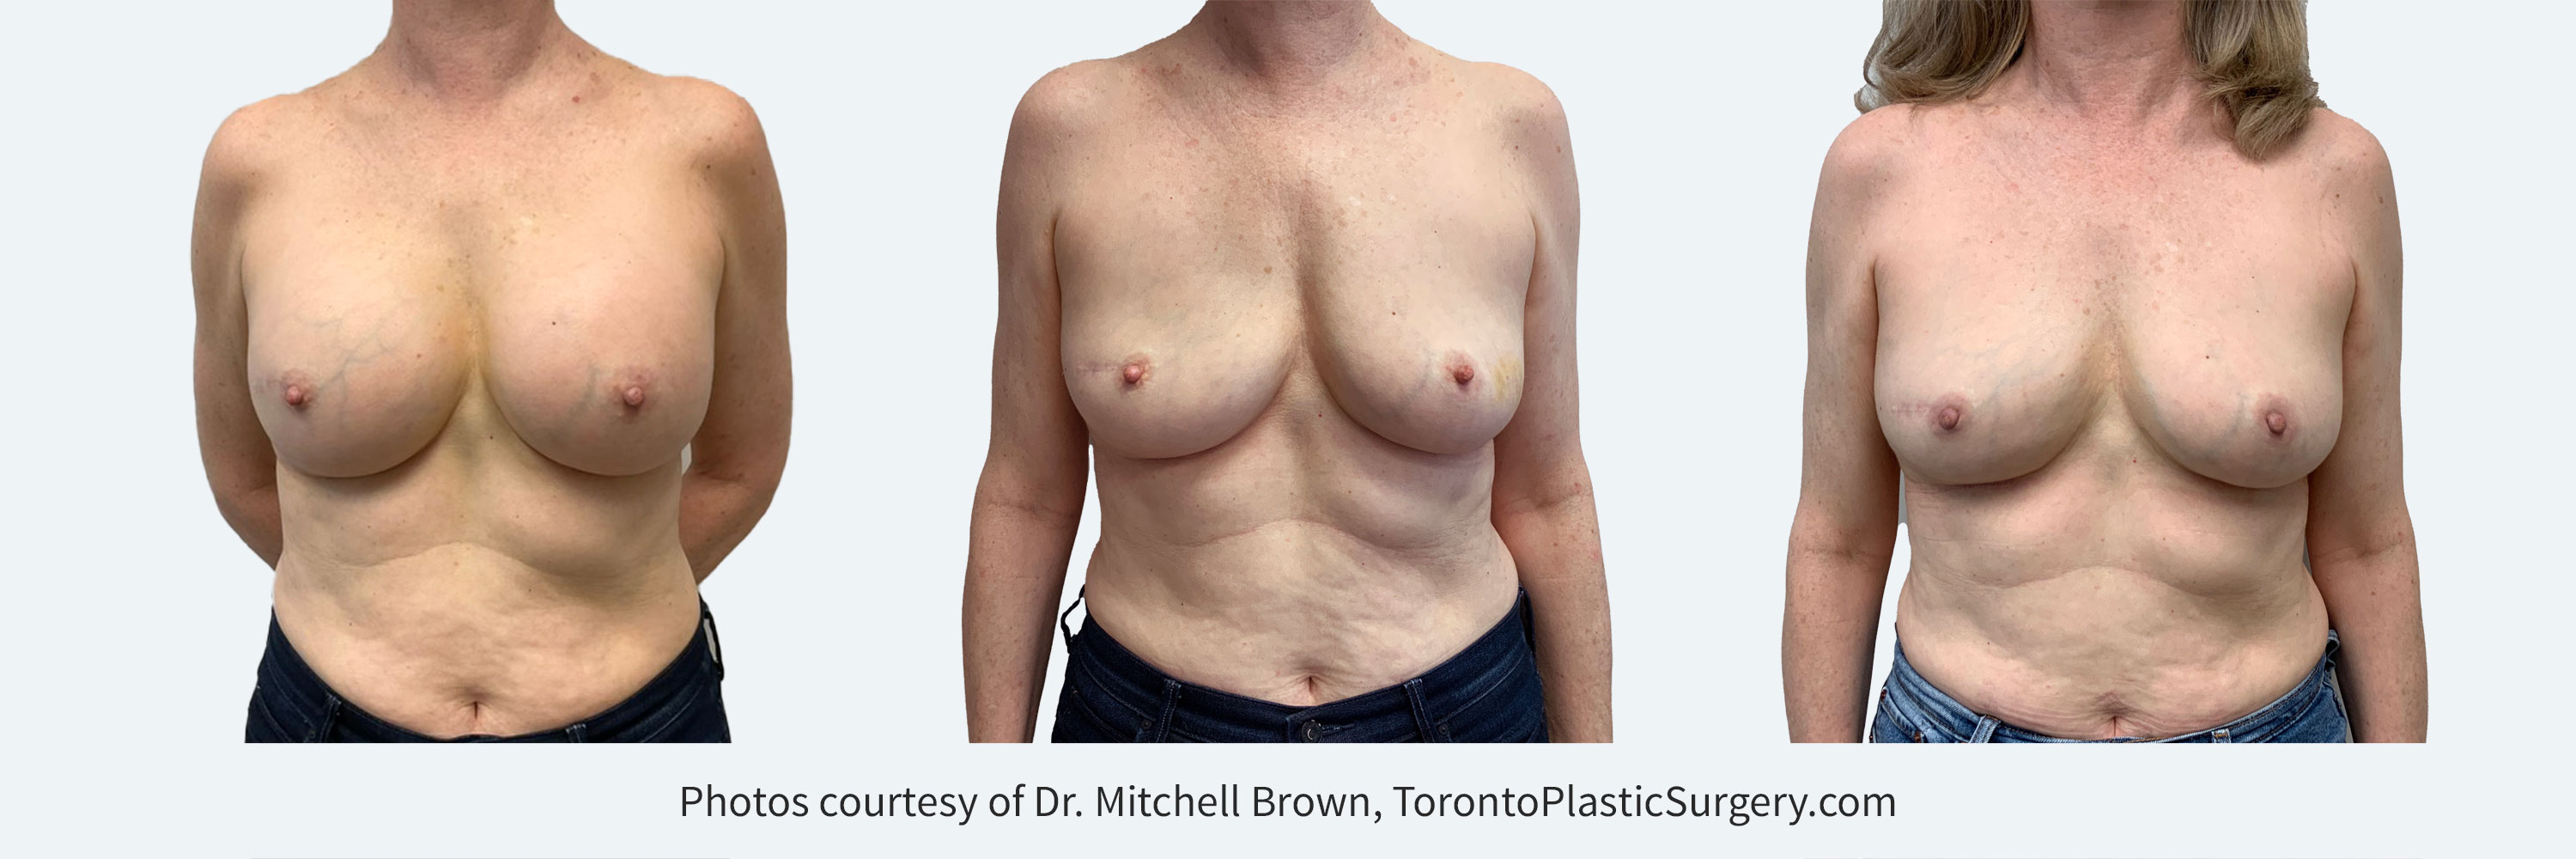 Implant Removal – Toronto Plastic Surgery